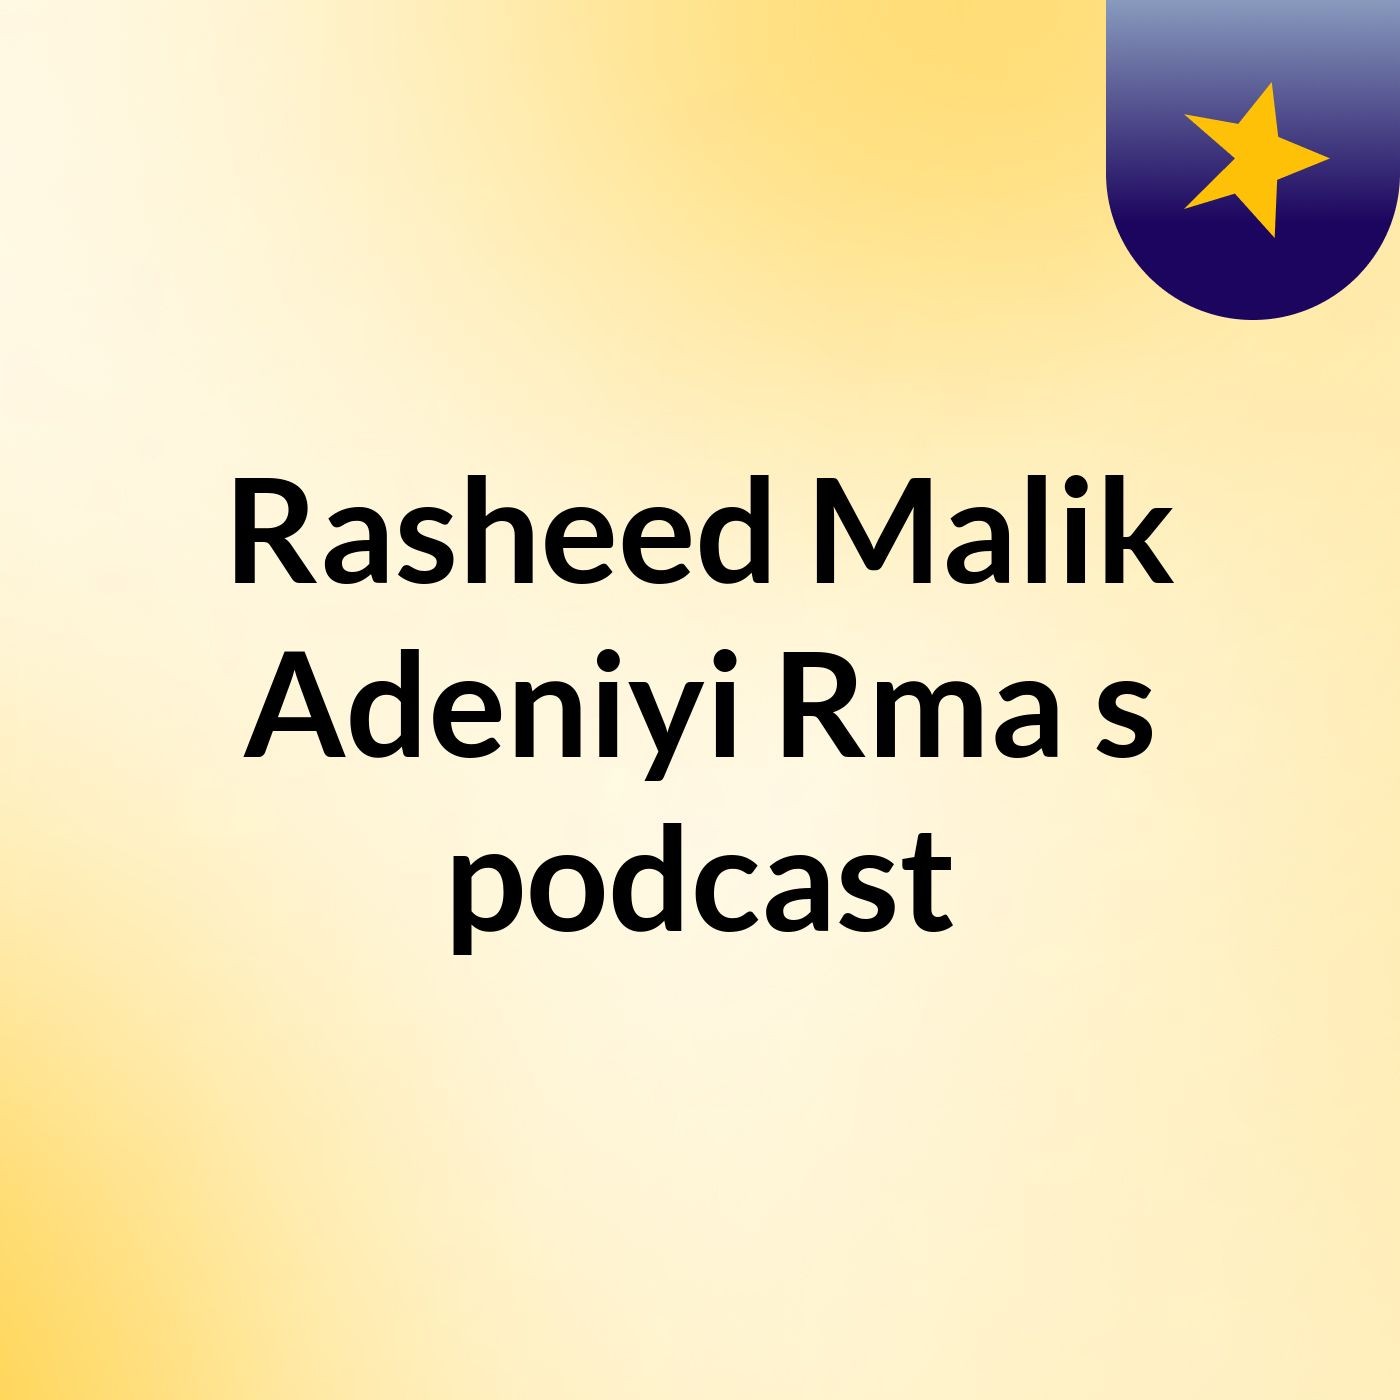 Rasheed Malik Adeniyi Rma's podcast